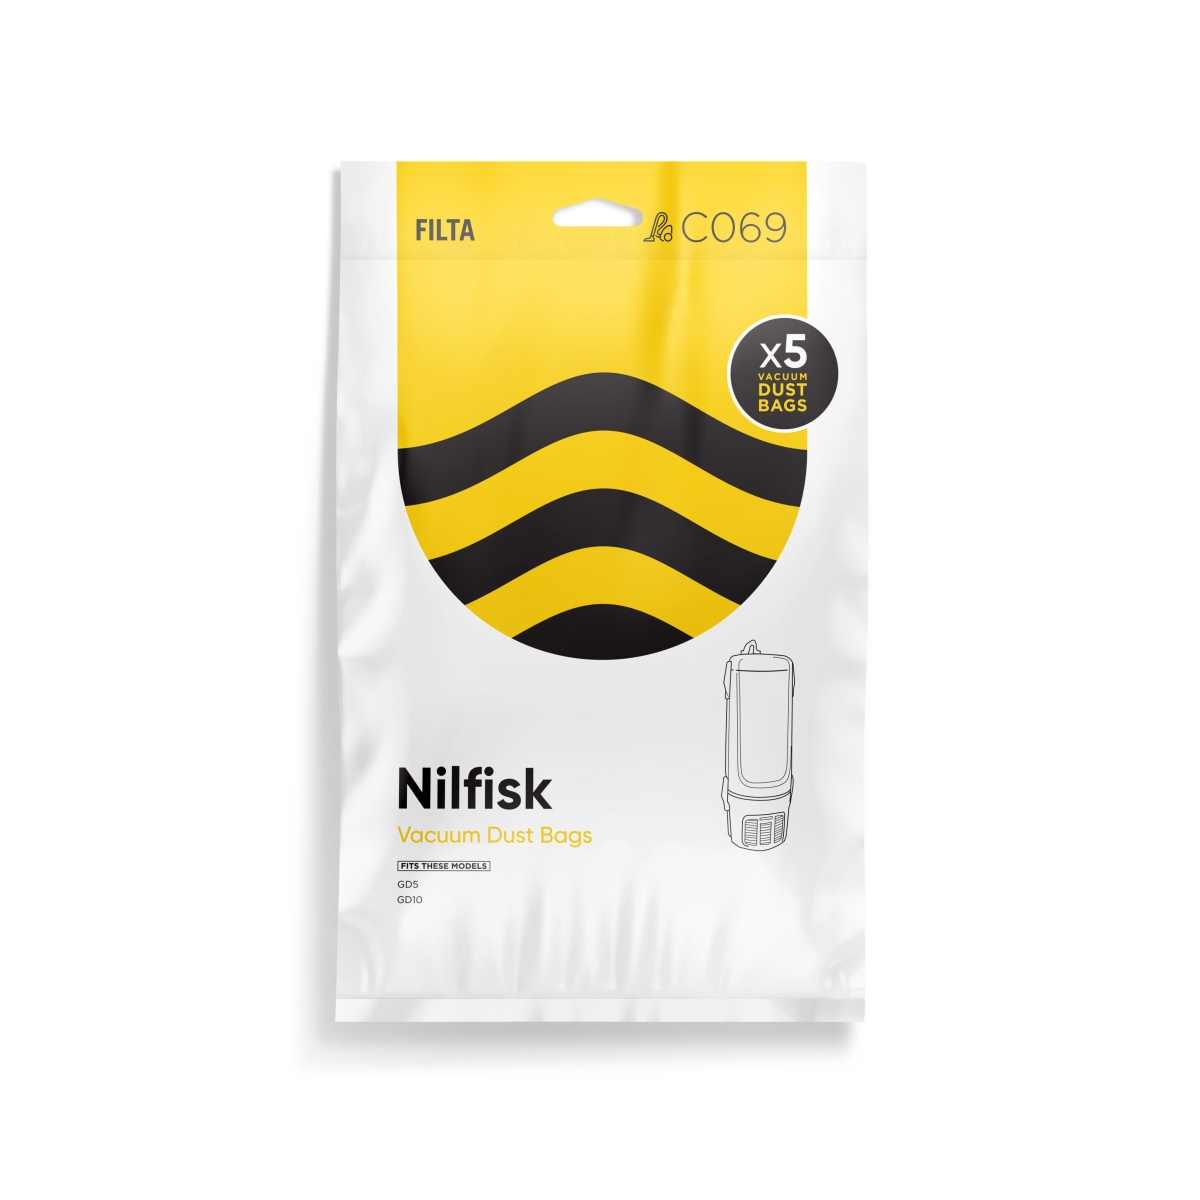 Filta Nilfisk GD5/GD10 Microfibre Vacuum Cleaner Bags (5 Pack)